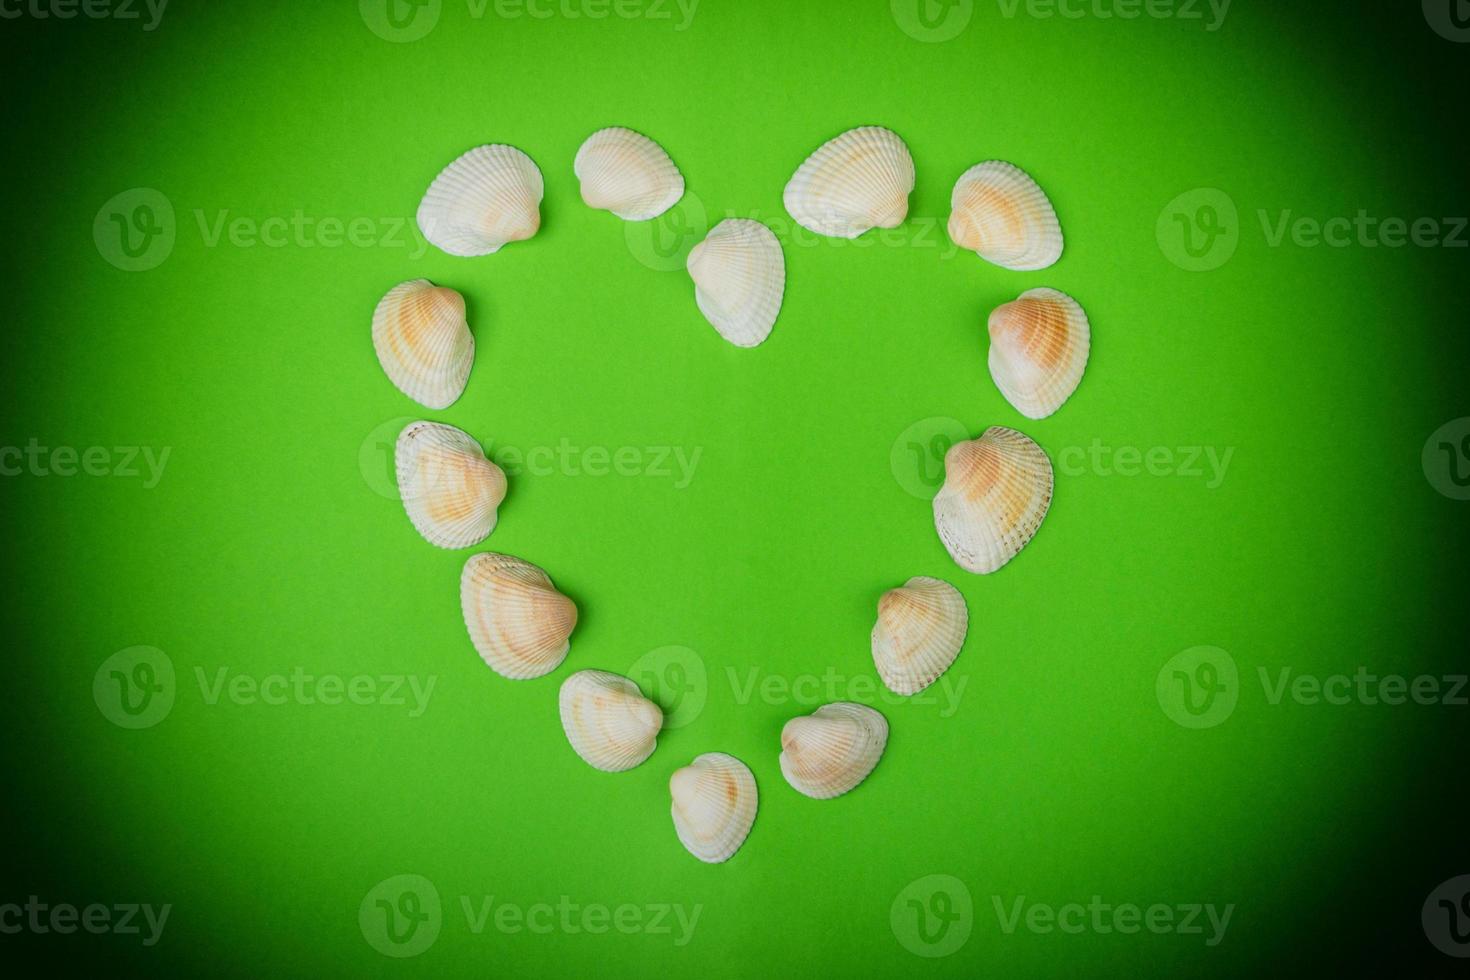 Symbolic heart made from seashells lying on green background photo